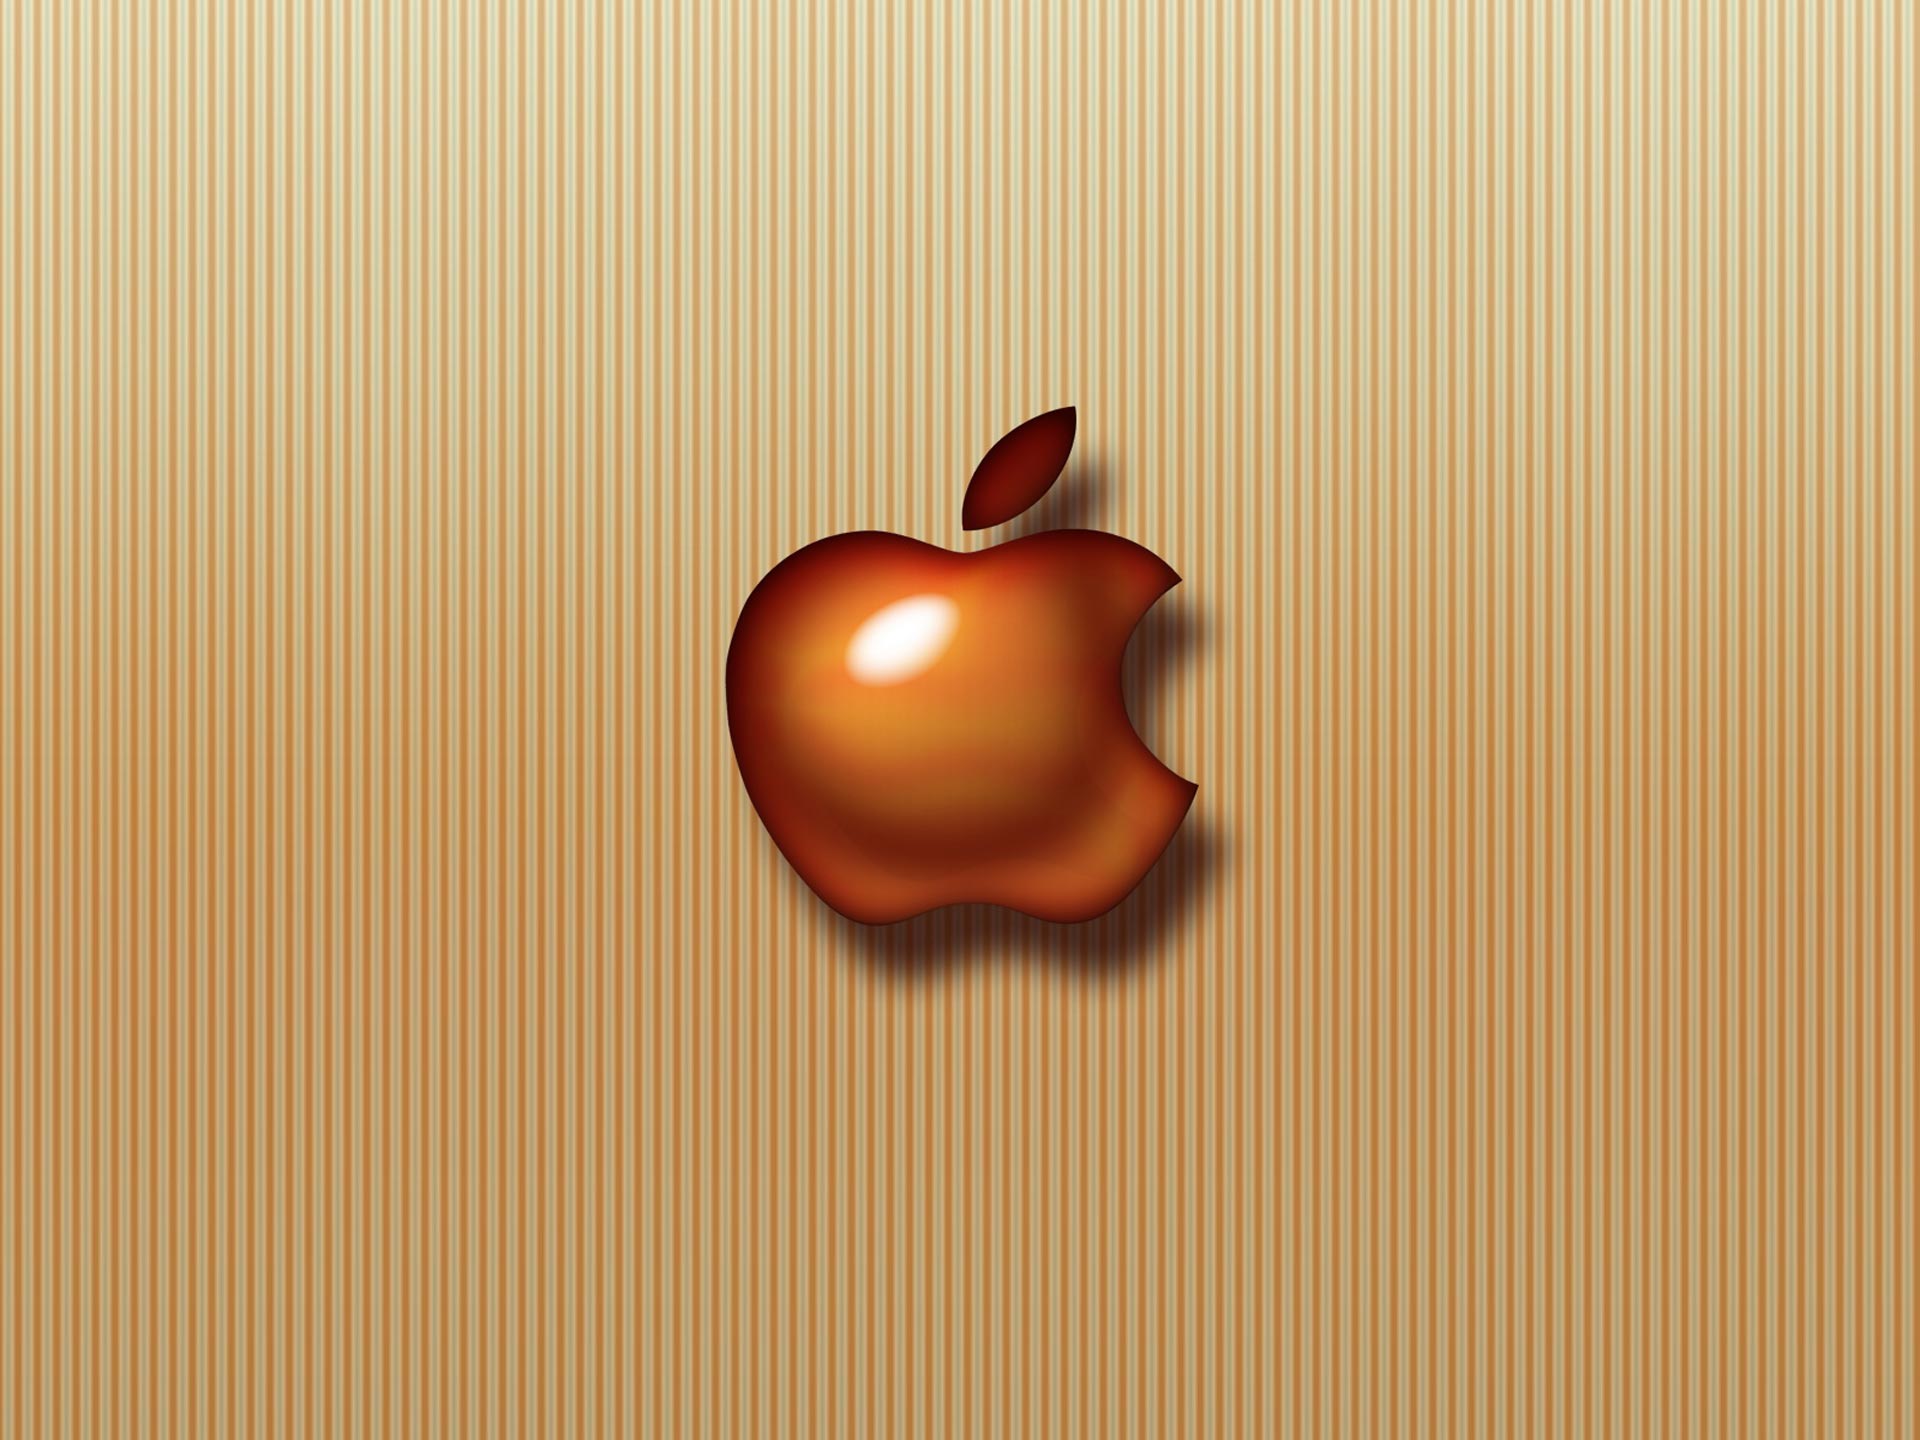 Desktop images of apples and oranges wallpaper